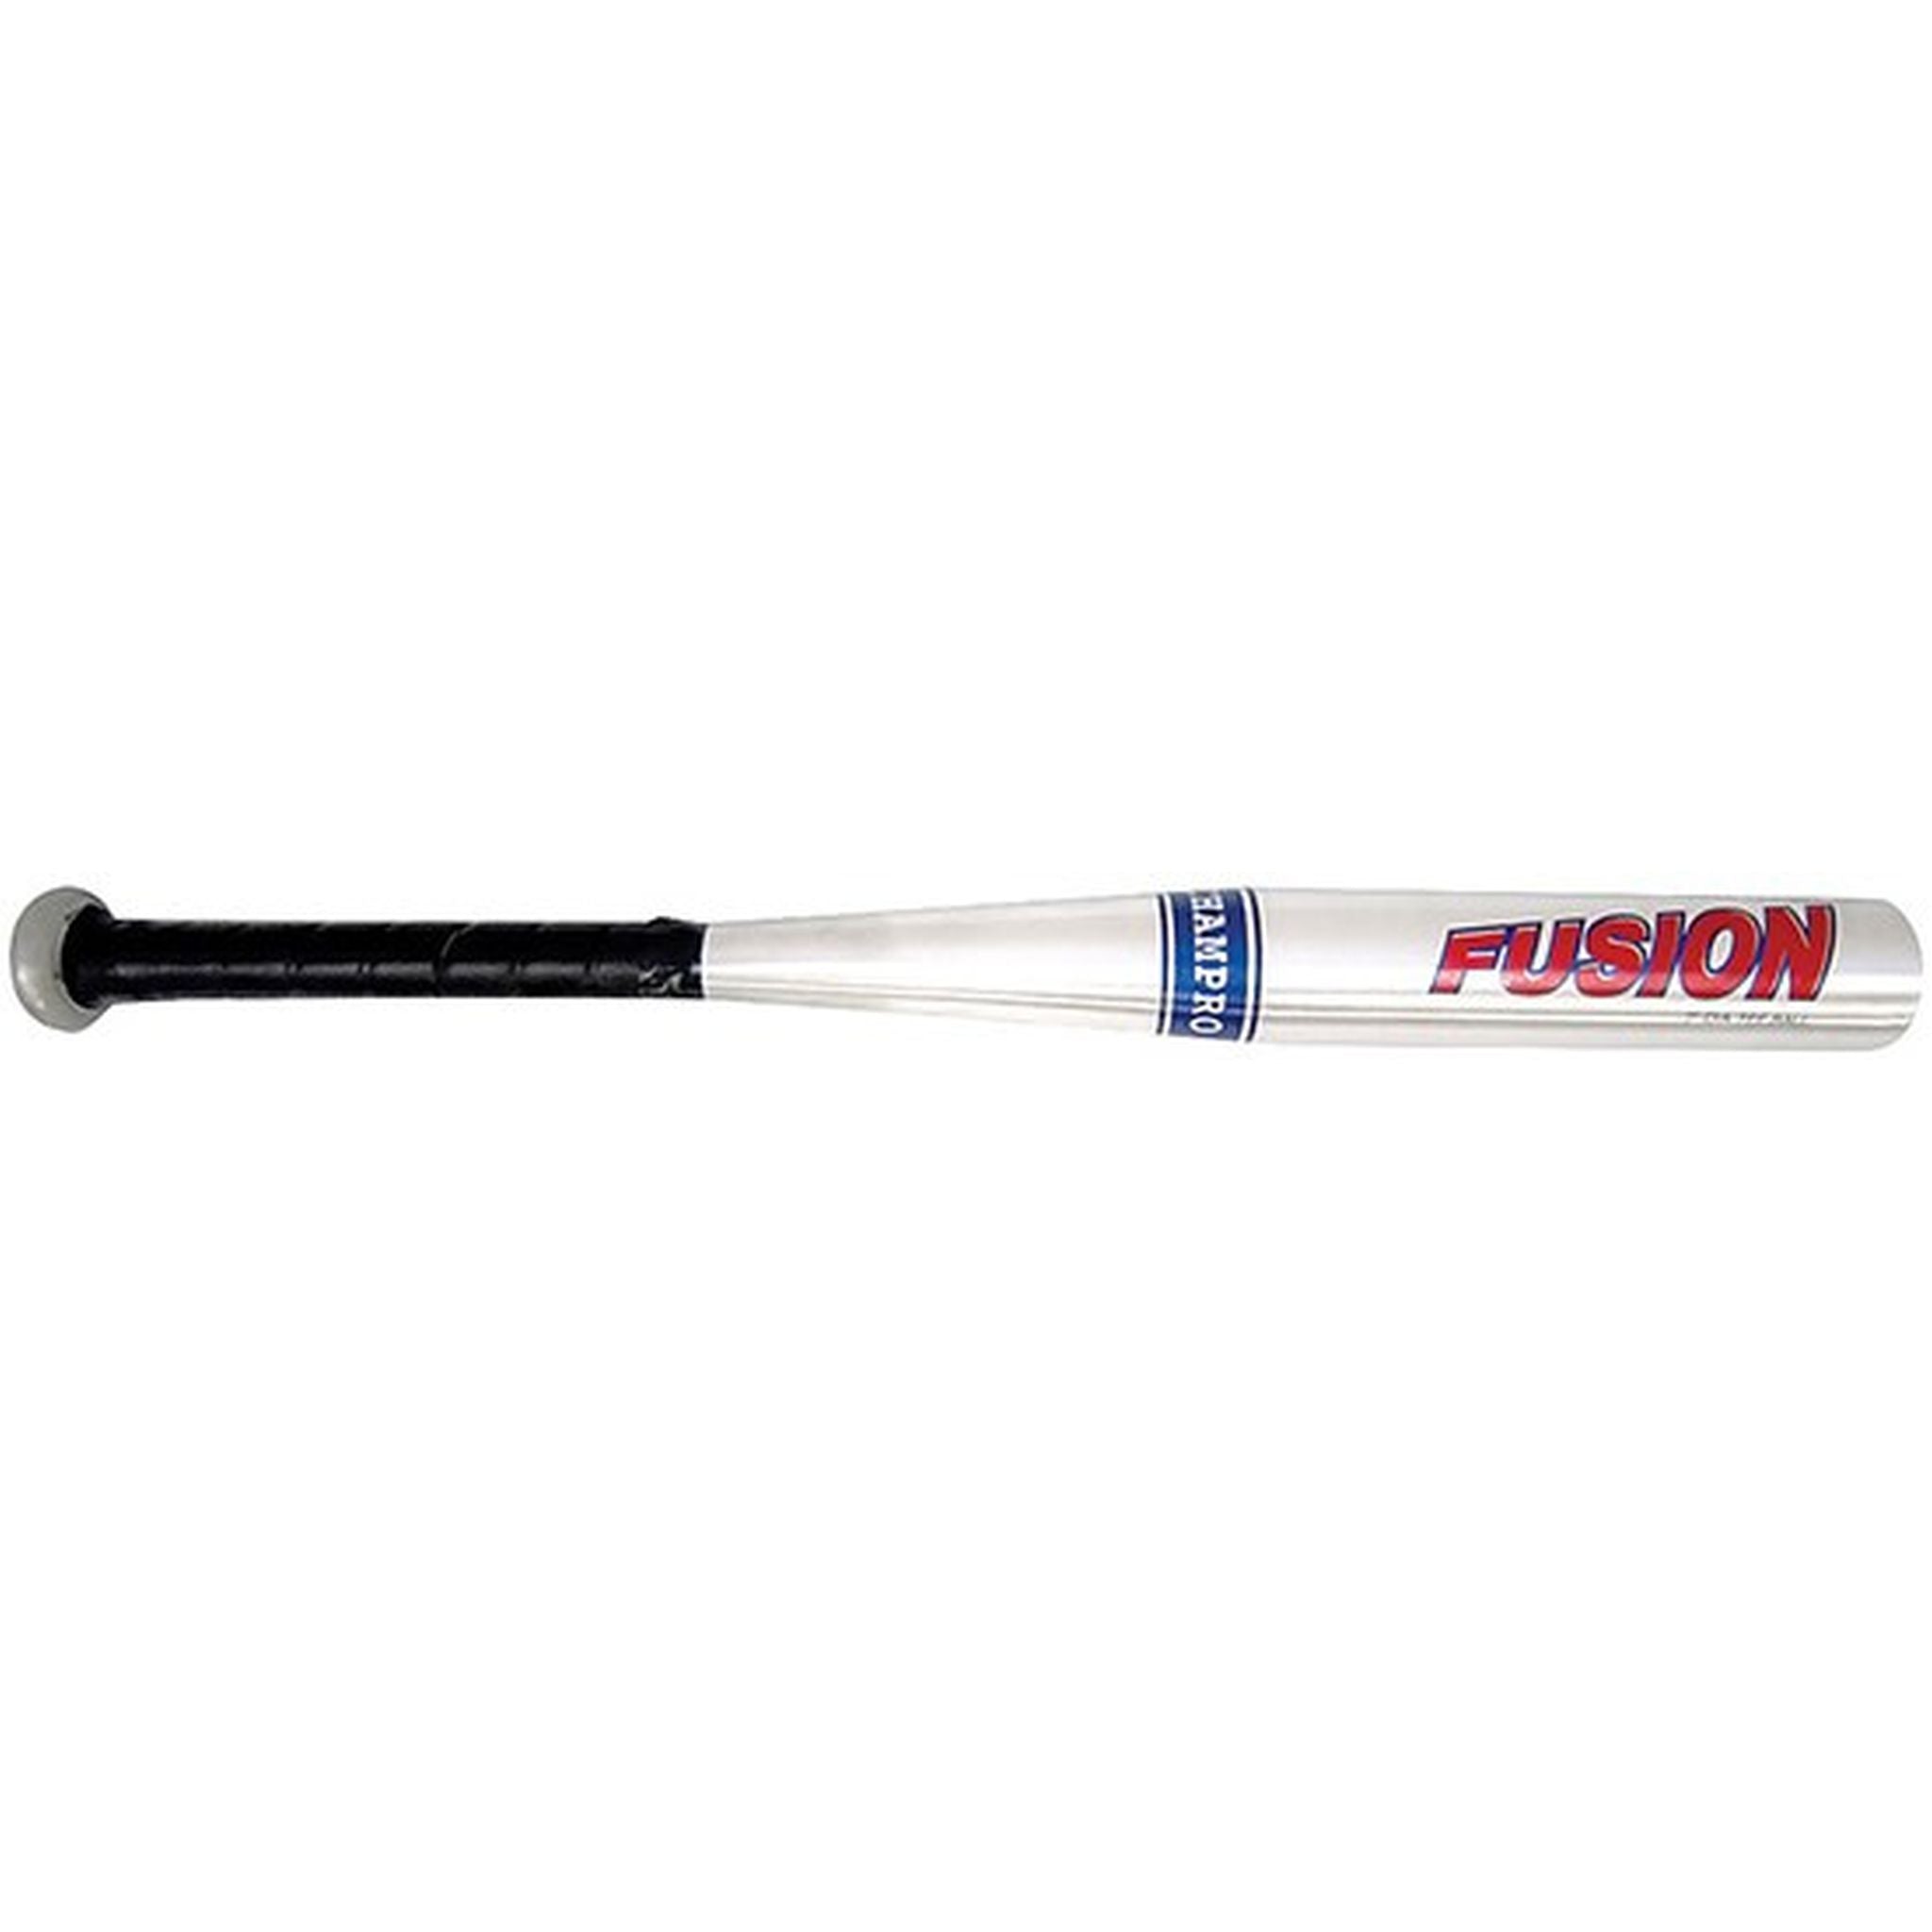 CHAMPRO Alloy Fusion 26-inch Teeball Bat